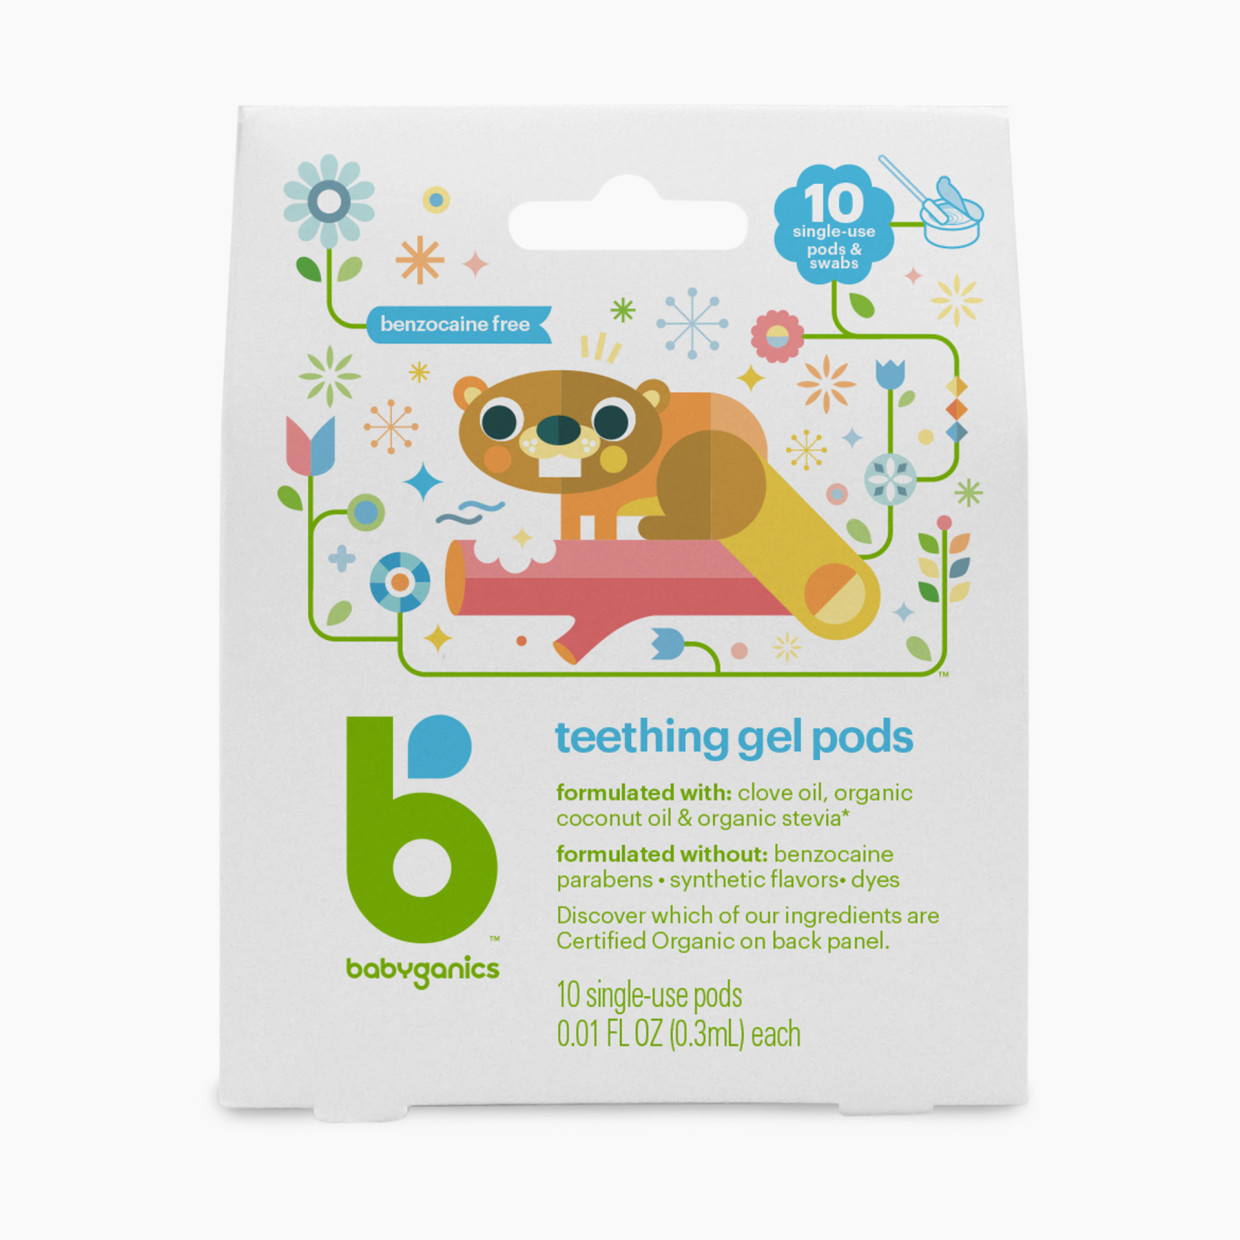 Babyganics Benzocaine-Free Gel Teething Pods (10 Pack).